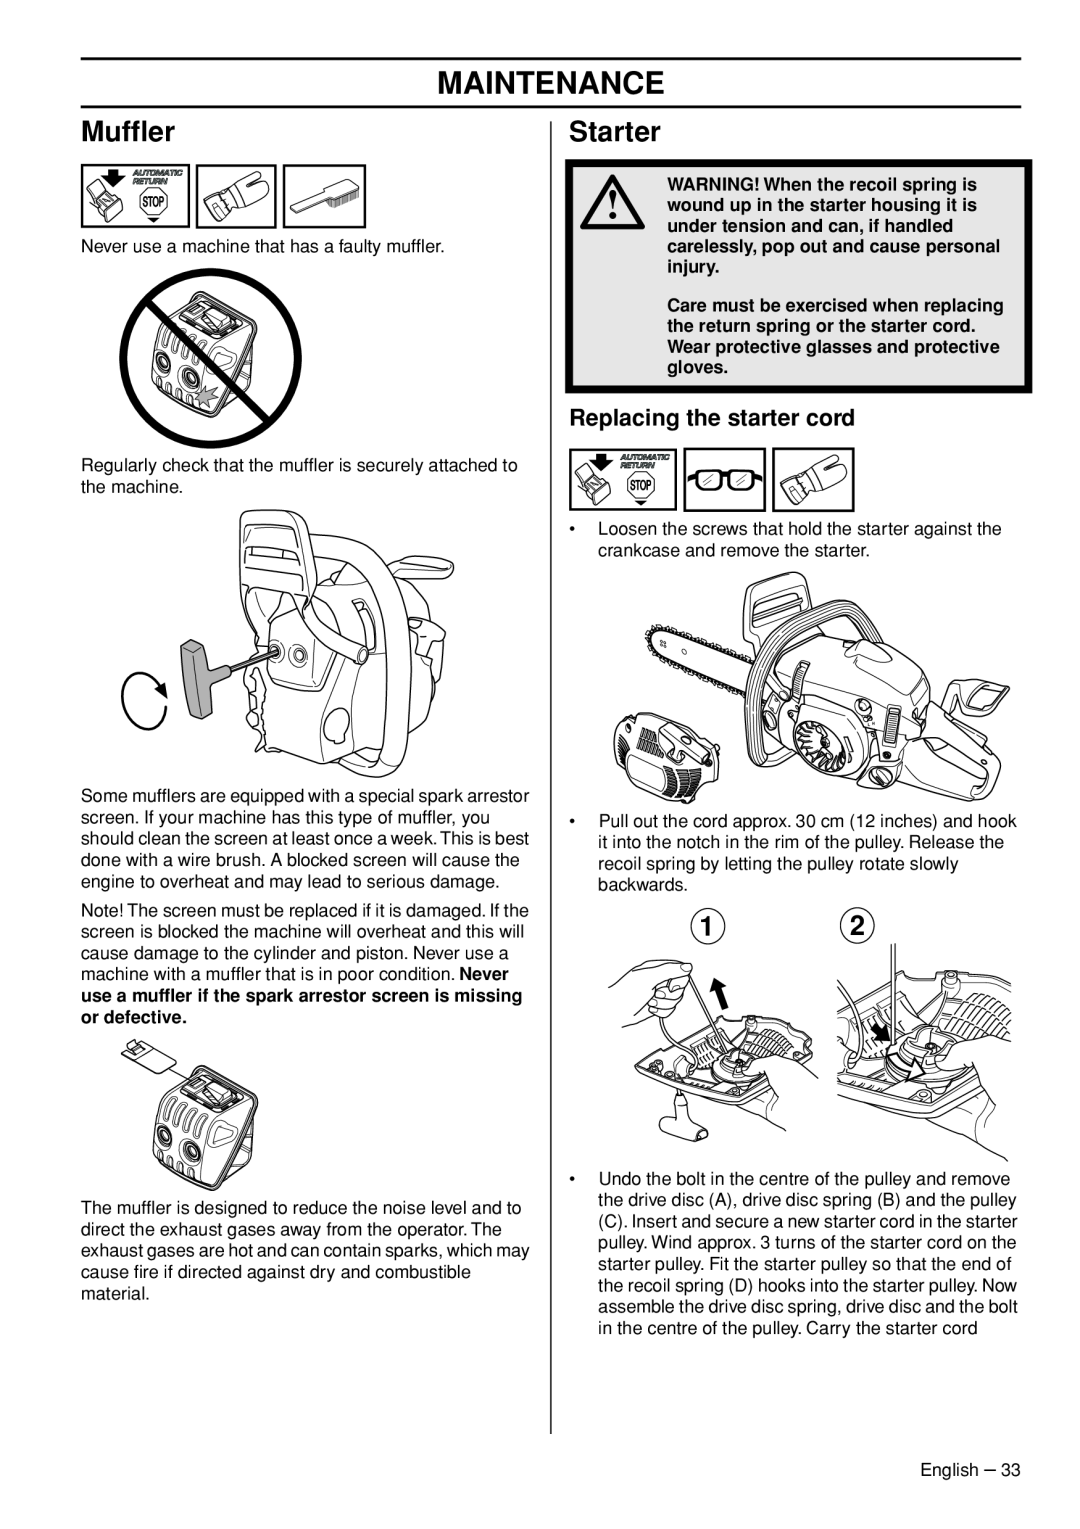 Husqvarna 445e TrioBrake manual Mufﬂer, Starter, Replacing the starter cord, Maintenance 